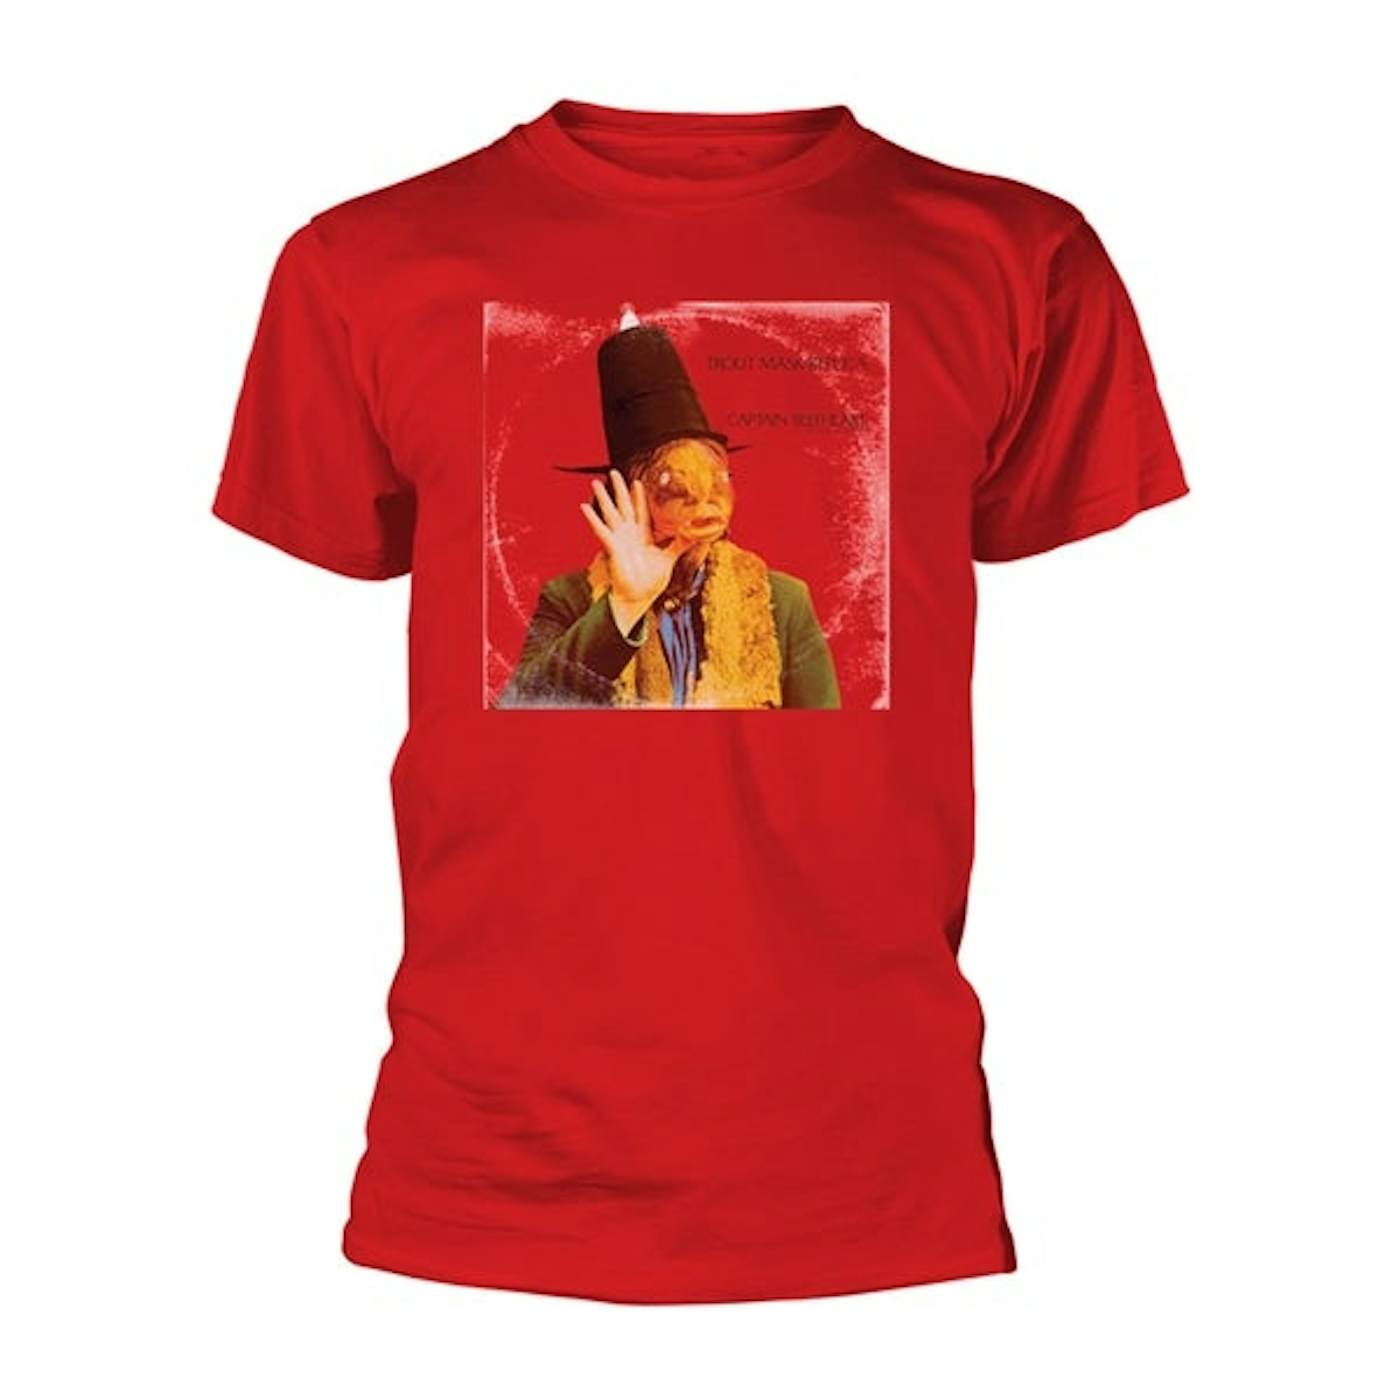 Captain Beefheart & His Magic Band T-Shirt - Trout Mask Replica